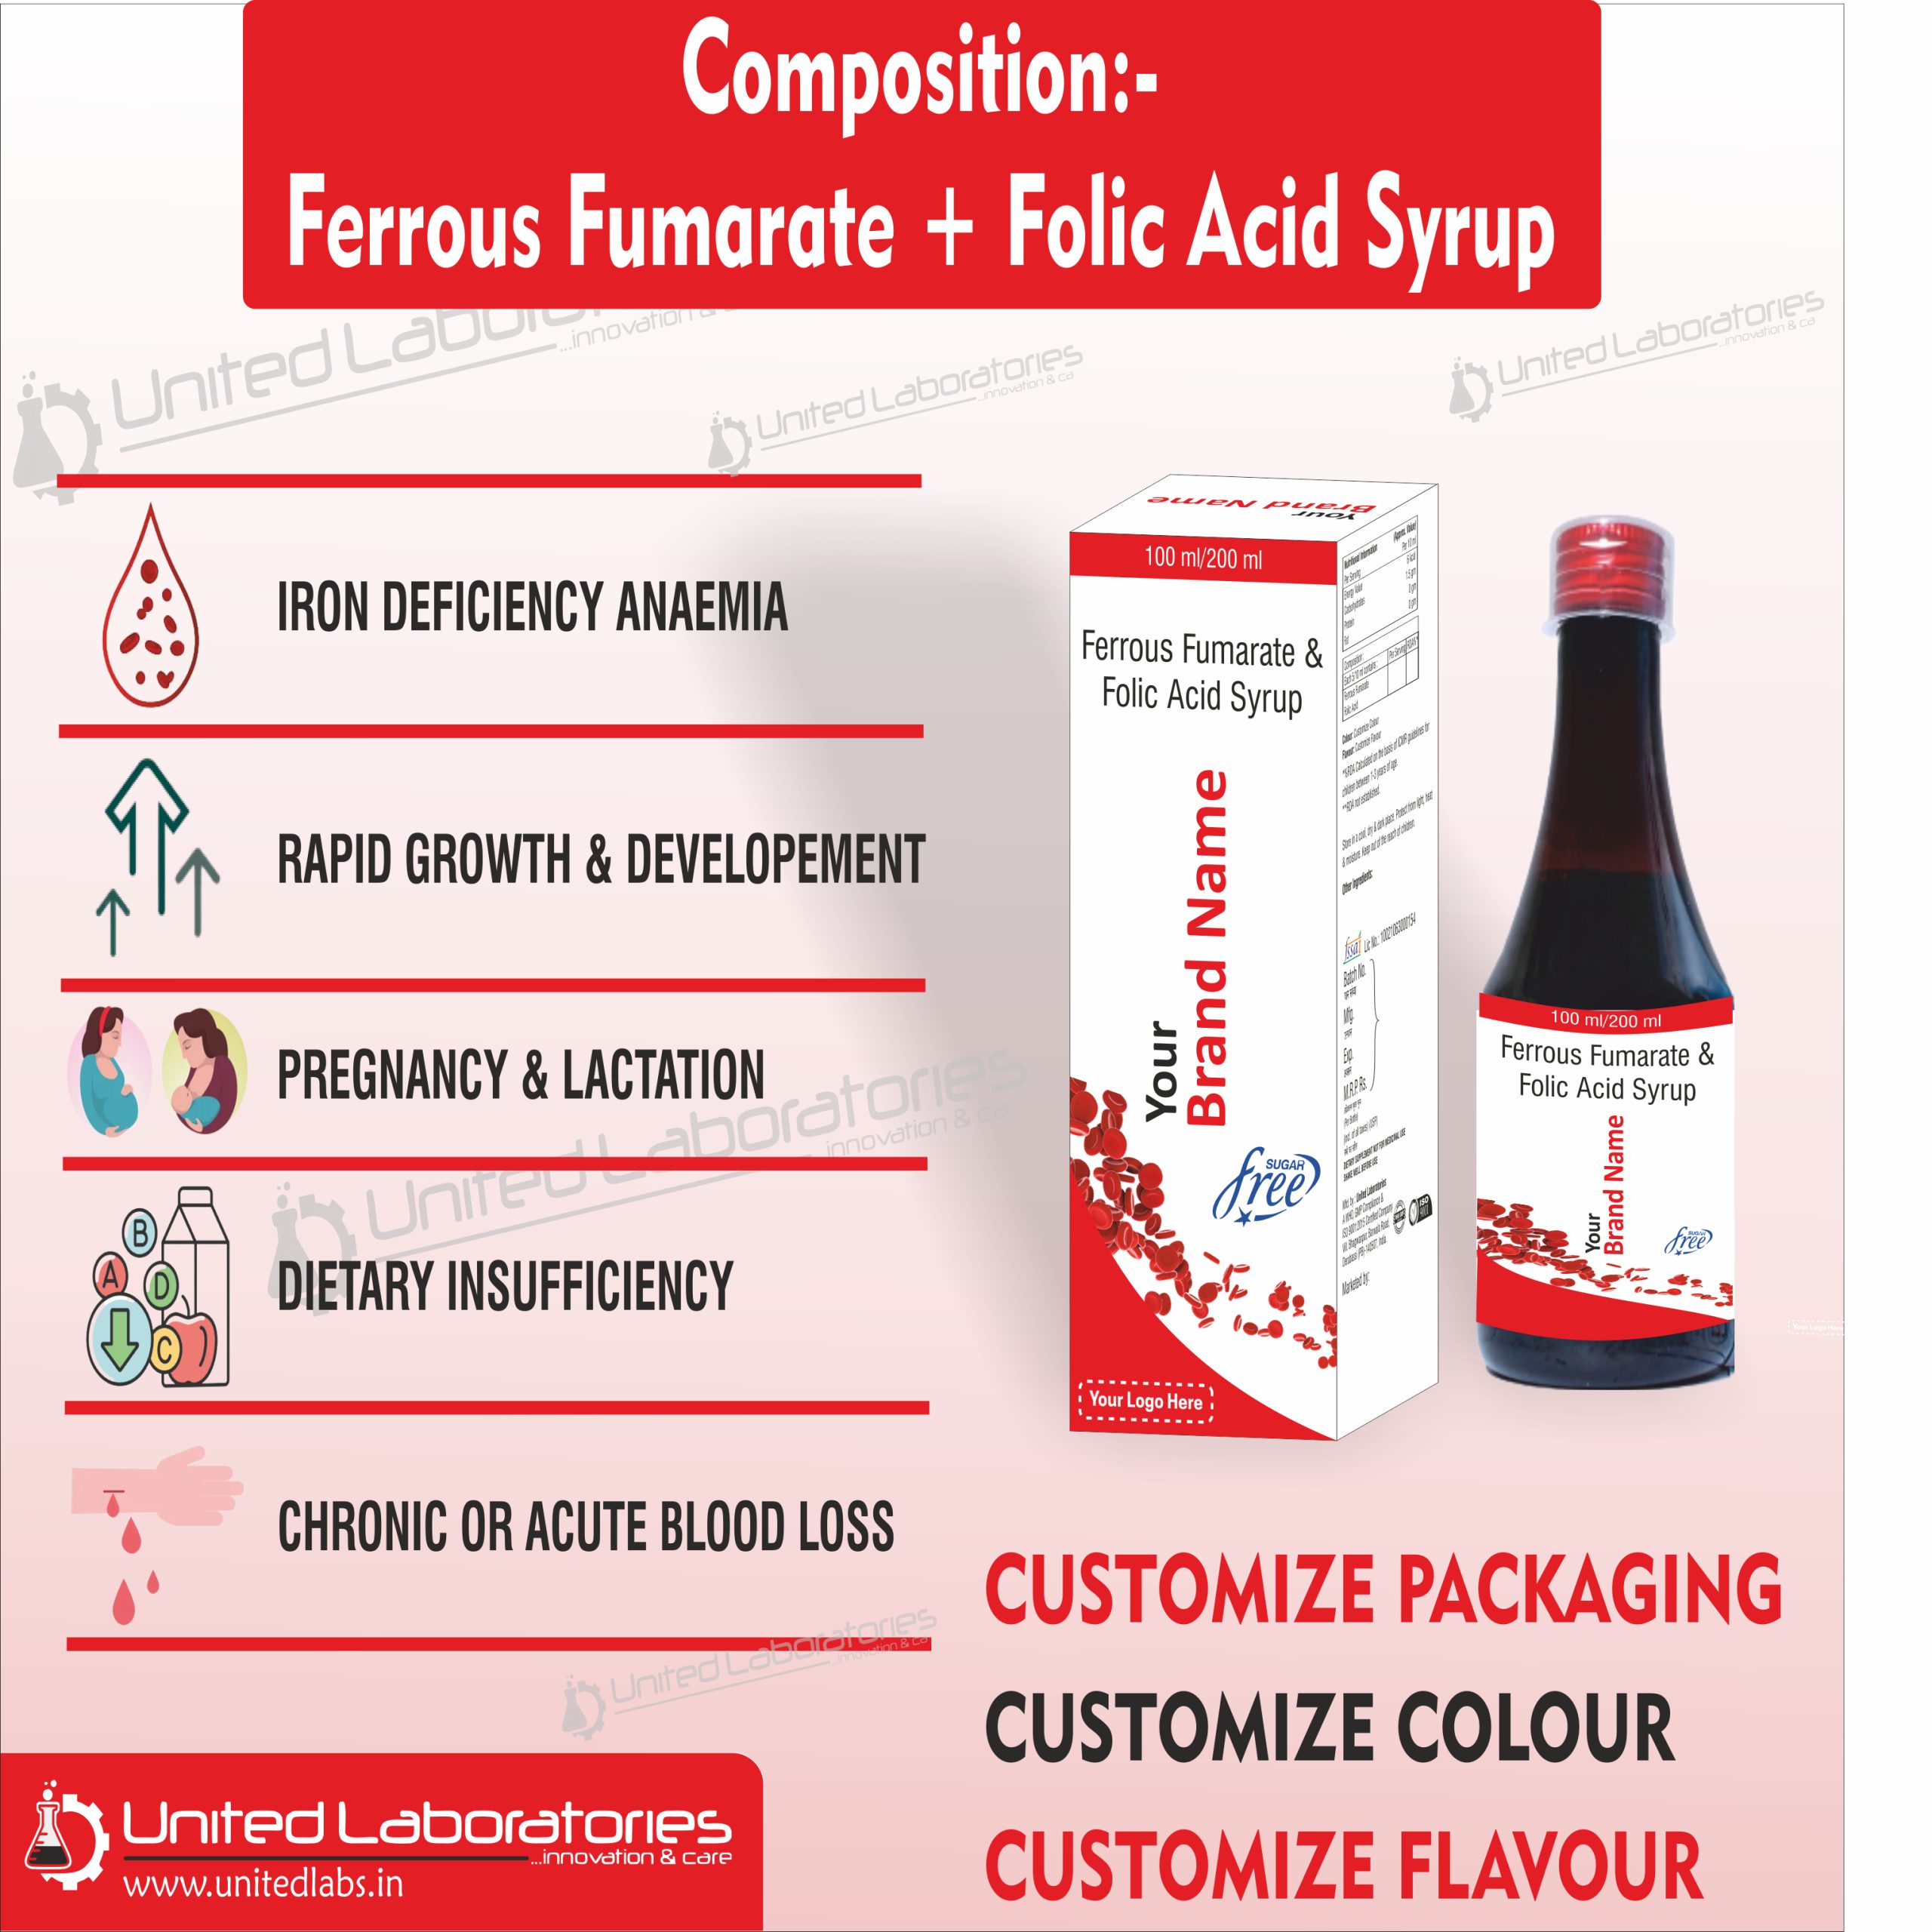 Ferrous Fumarate + Folic Acid Syrup